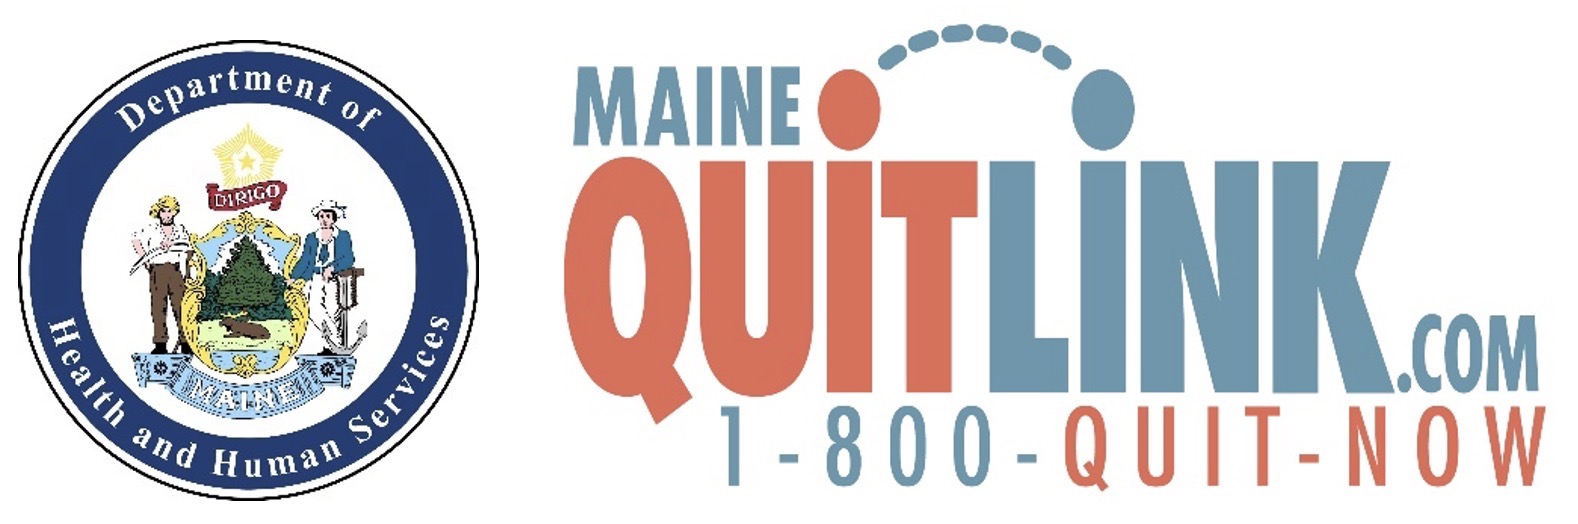 Maine Tobacco Helpline logo and phone number